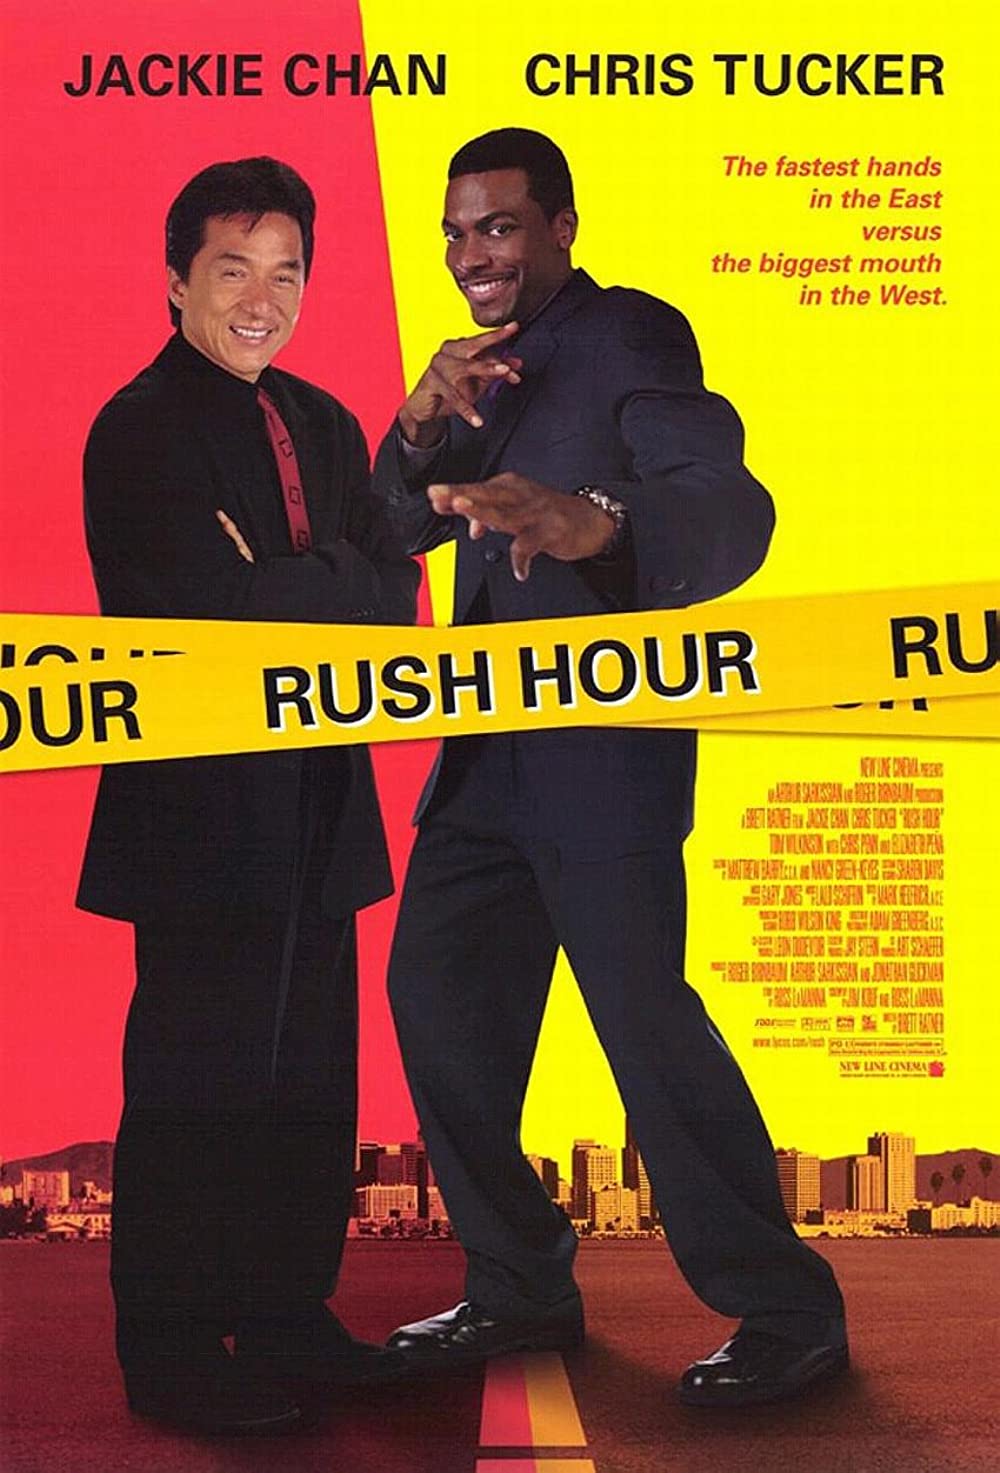 Filmbeschreibung zu Rush Hour